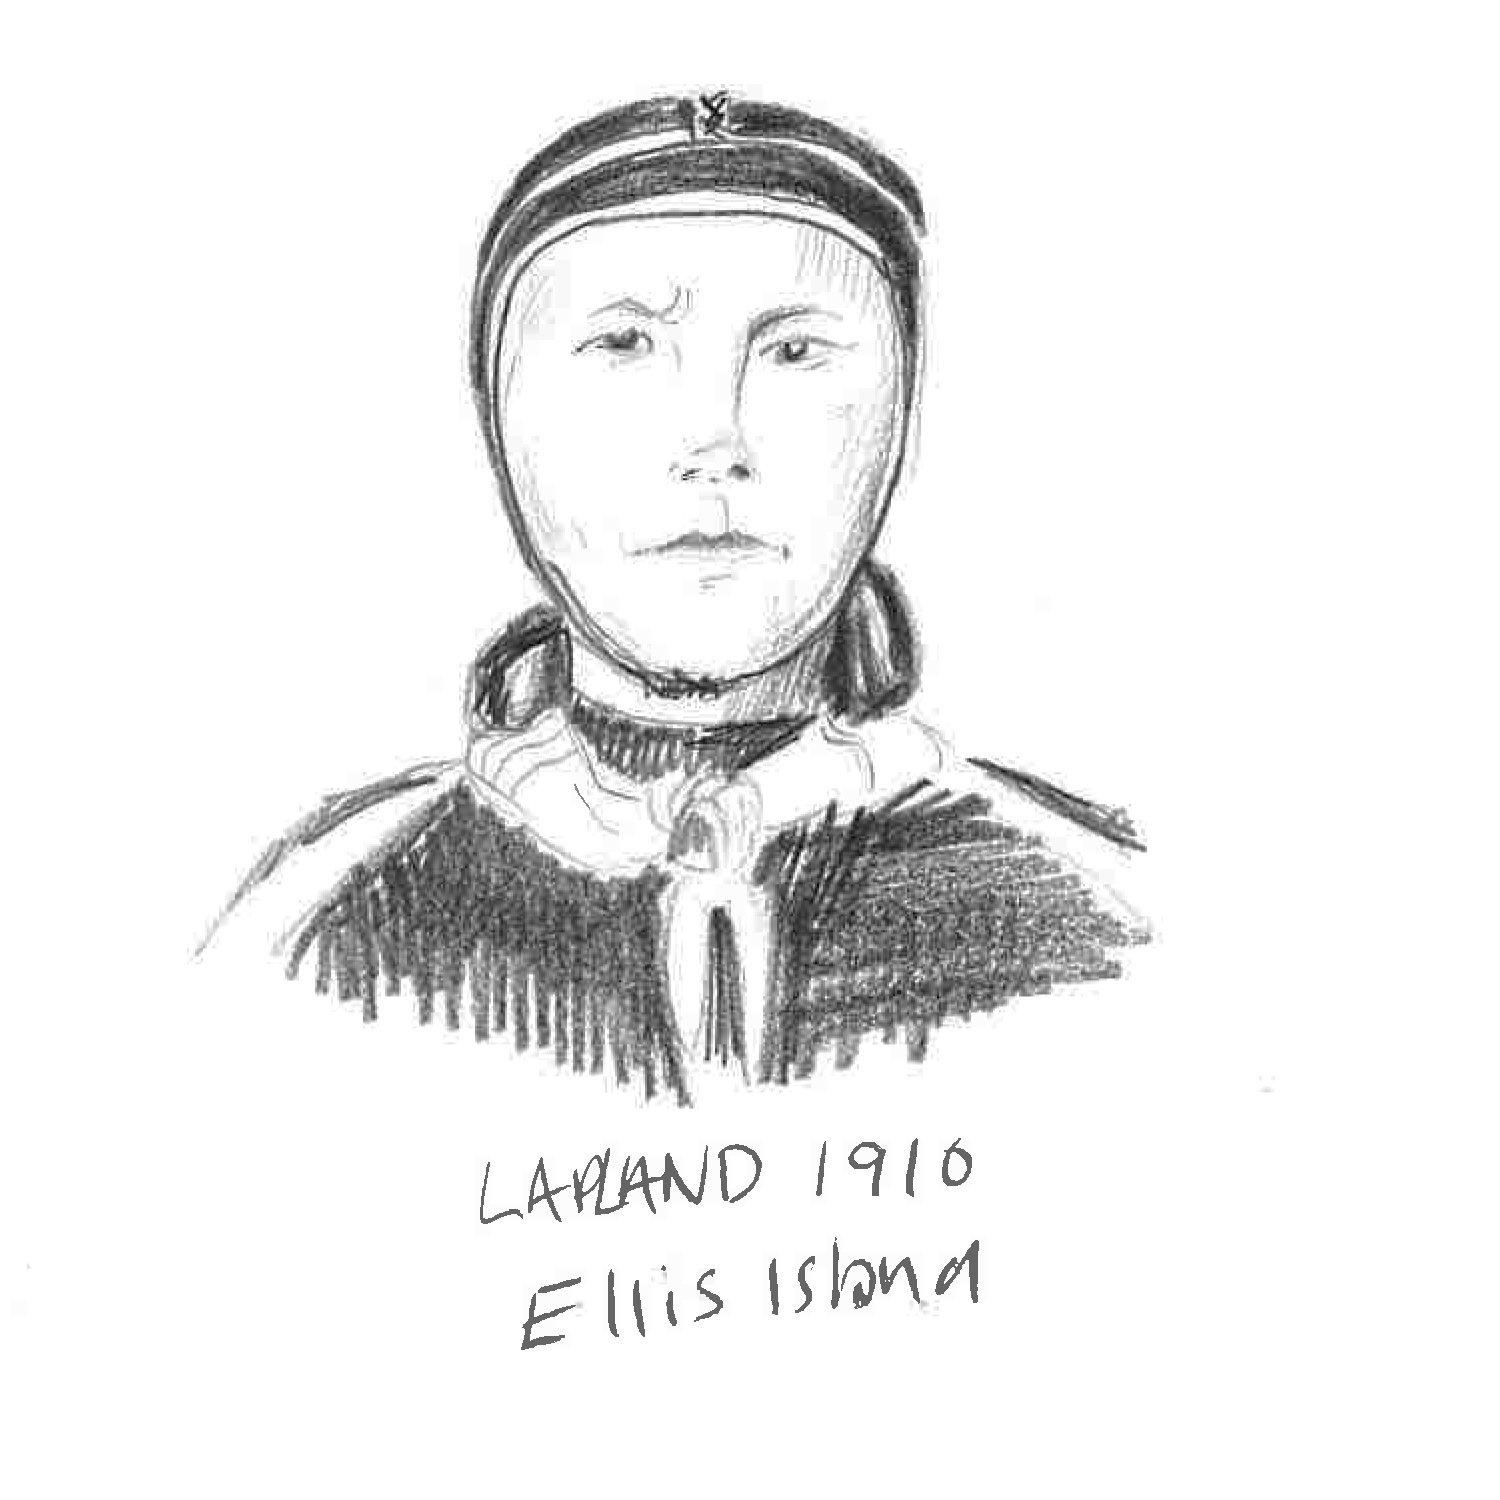 Woman from Lapland Ellis Island.jpg